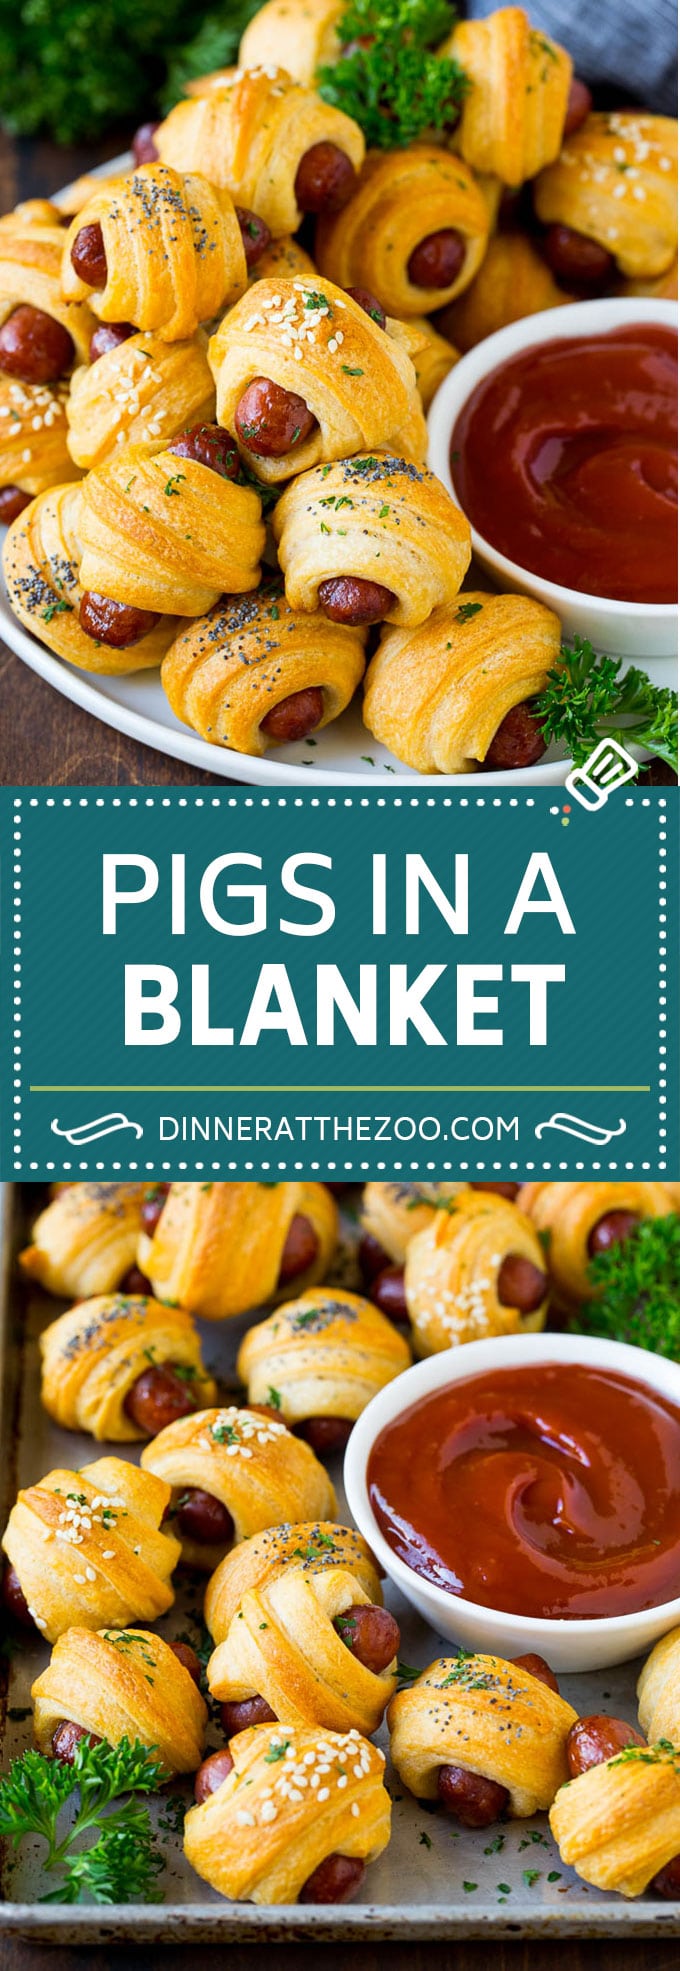 Pigs in a Blanket Recipe #hotdogs #appetizer #snack #comfortfood #dinneratthezoo